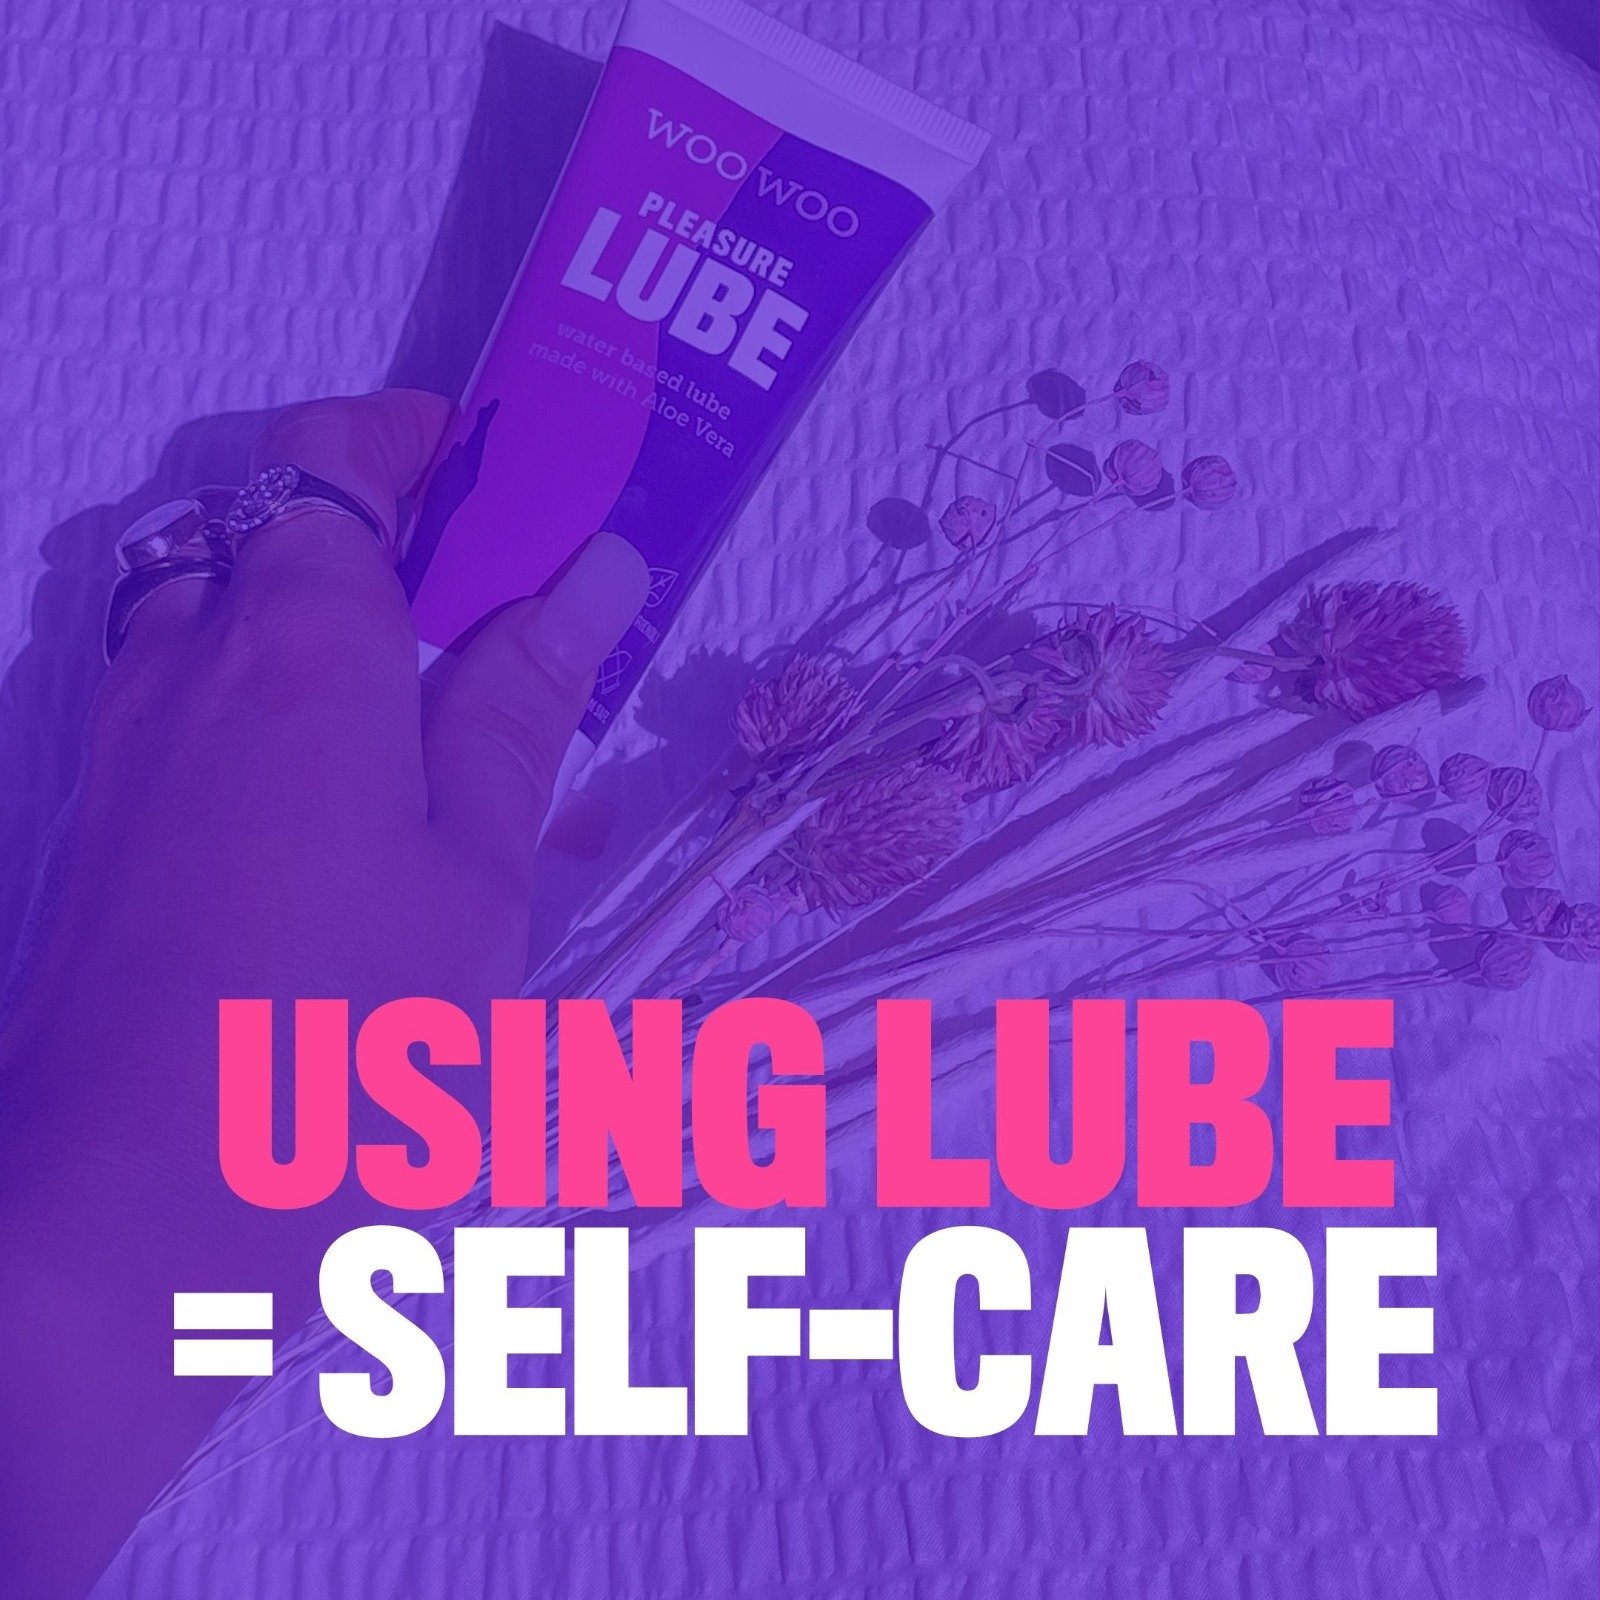 USING LUBE = SELF-CARE